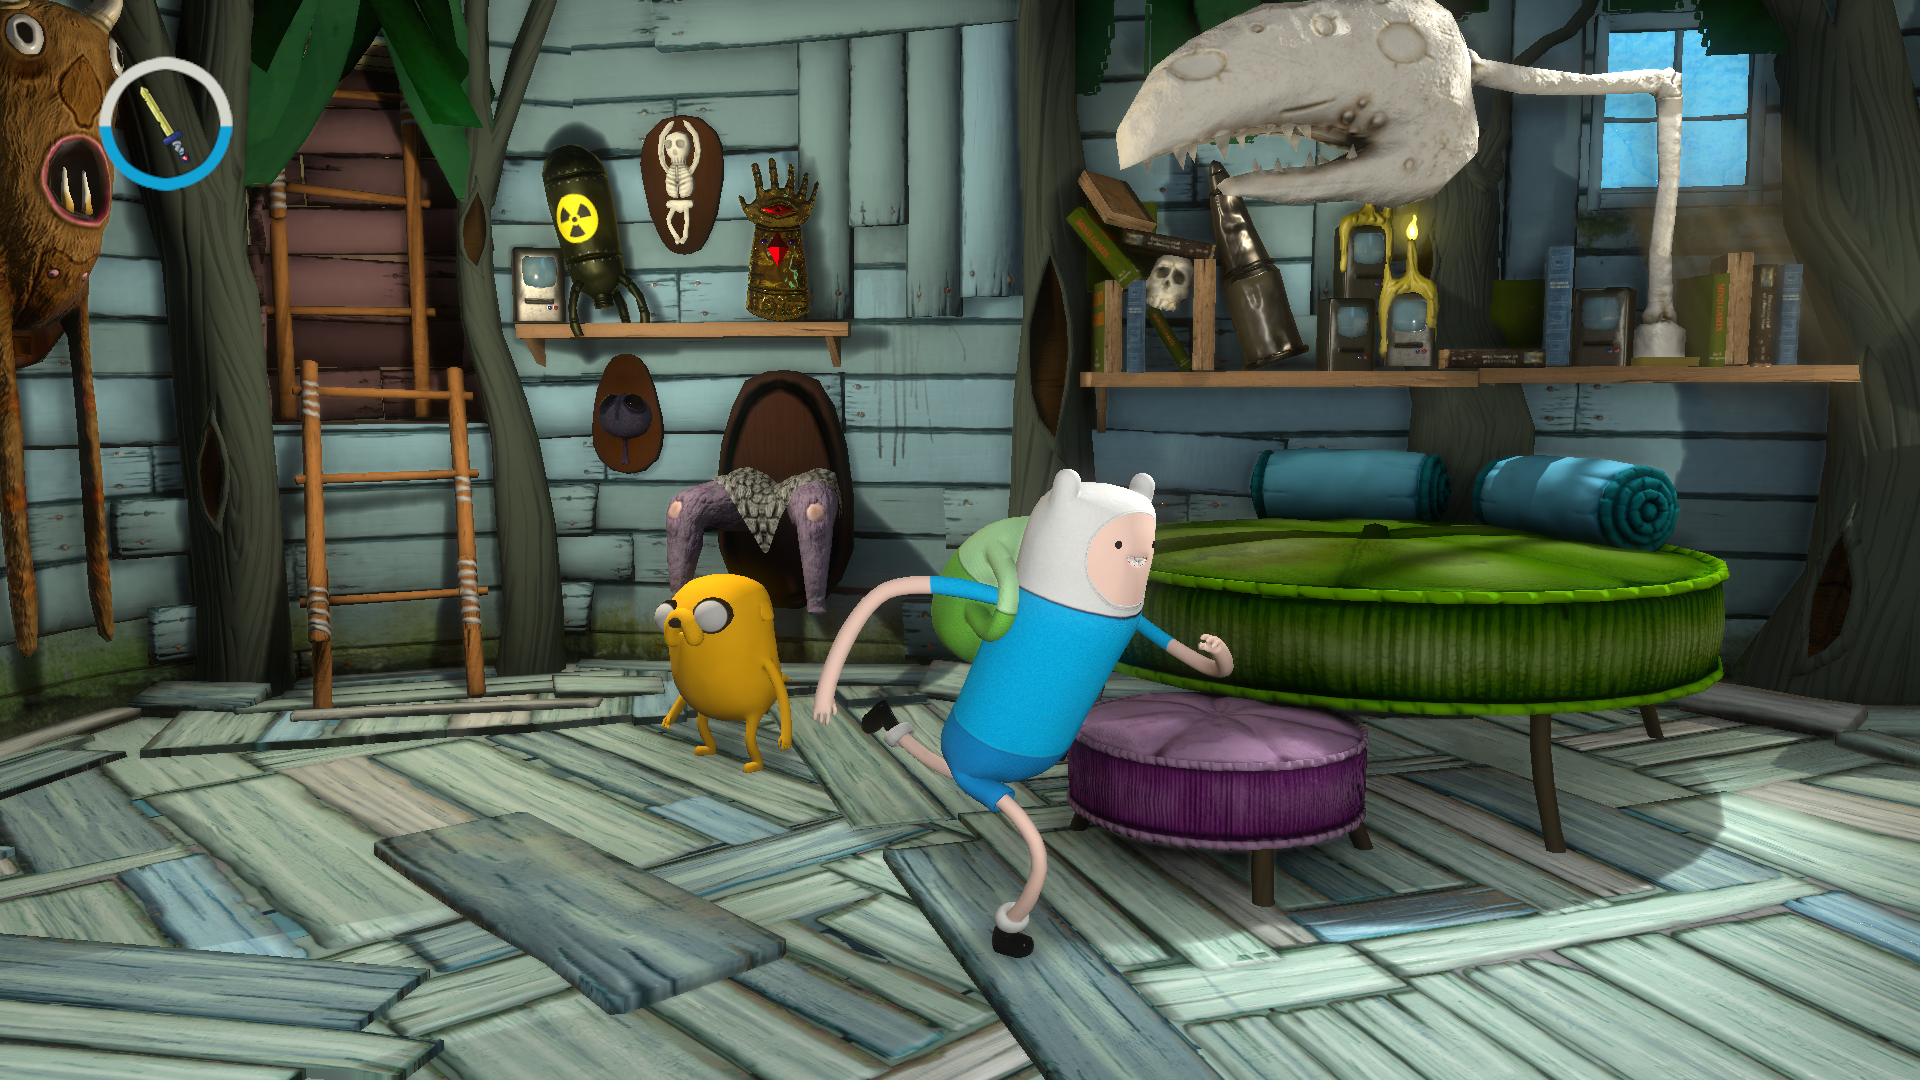 Little Orbit Developing New Adventure Time, Cartoon Network Games